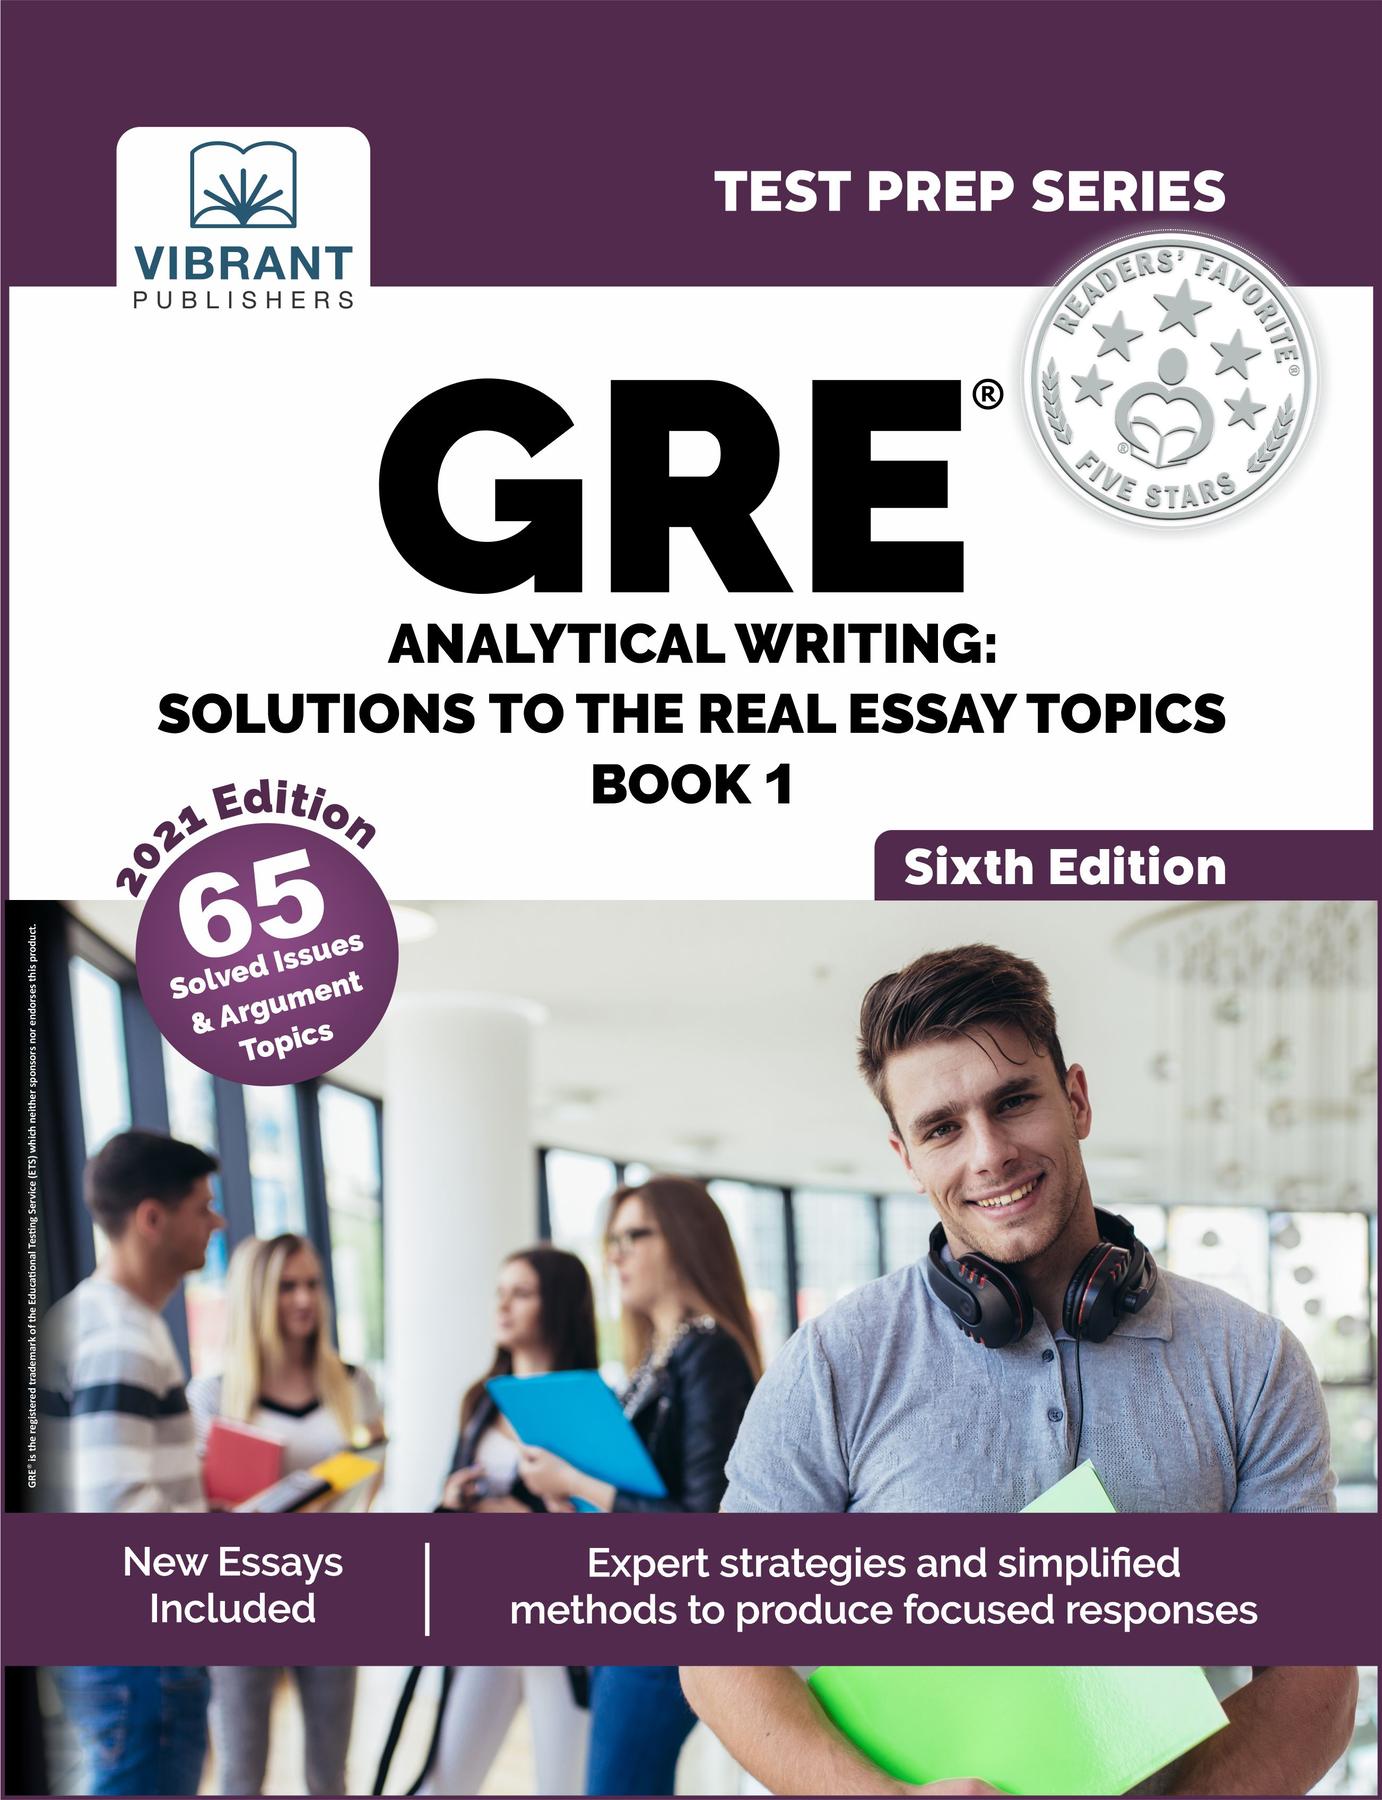 gre analytical writing pdf